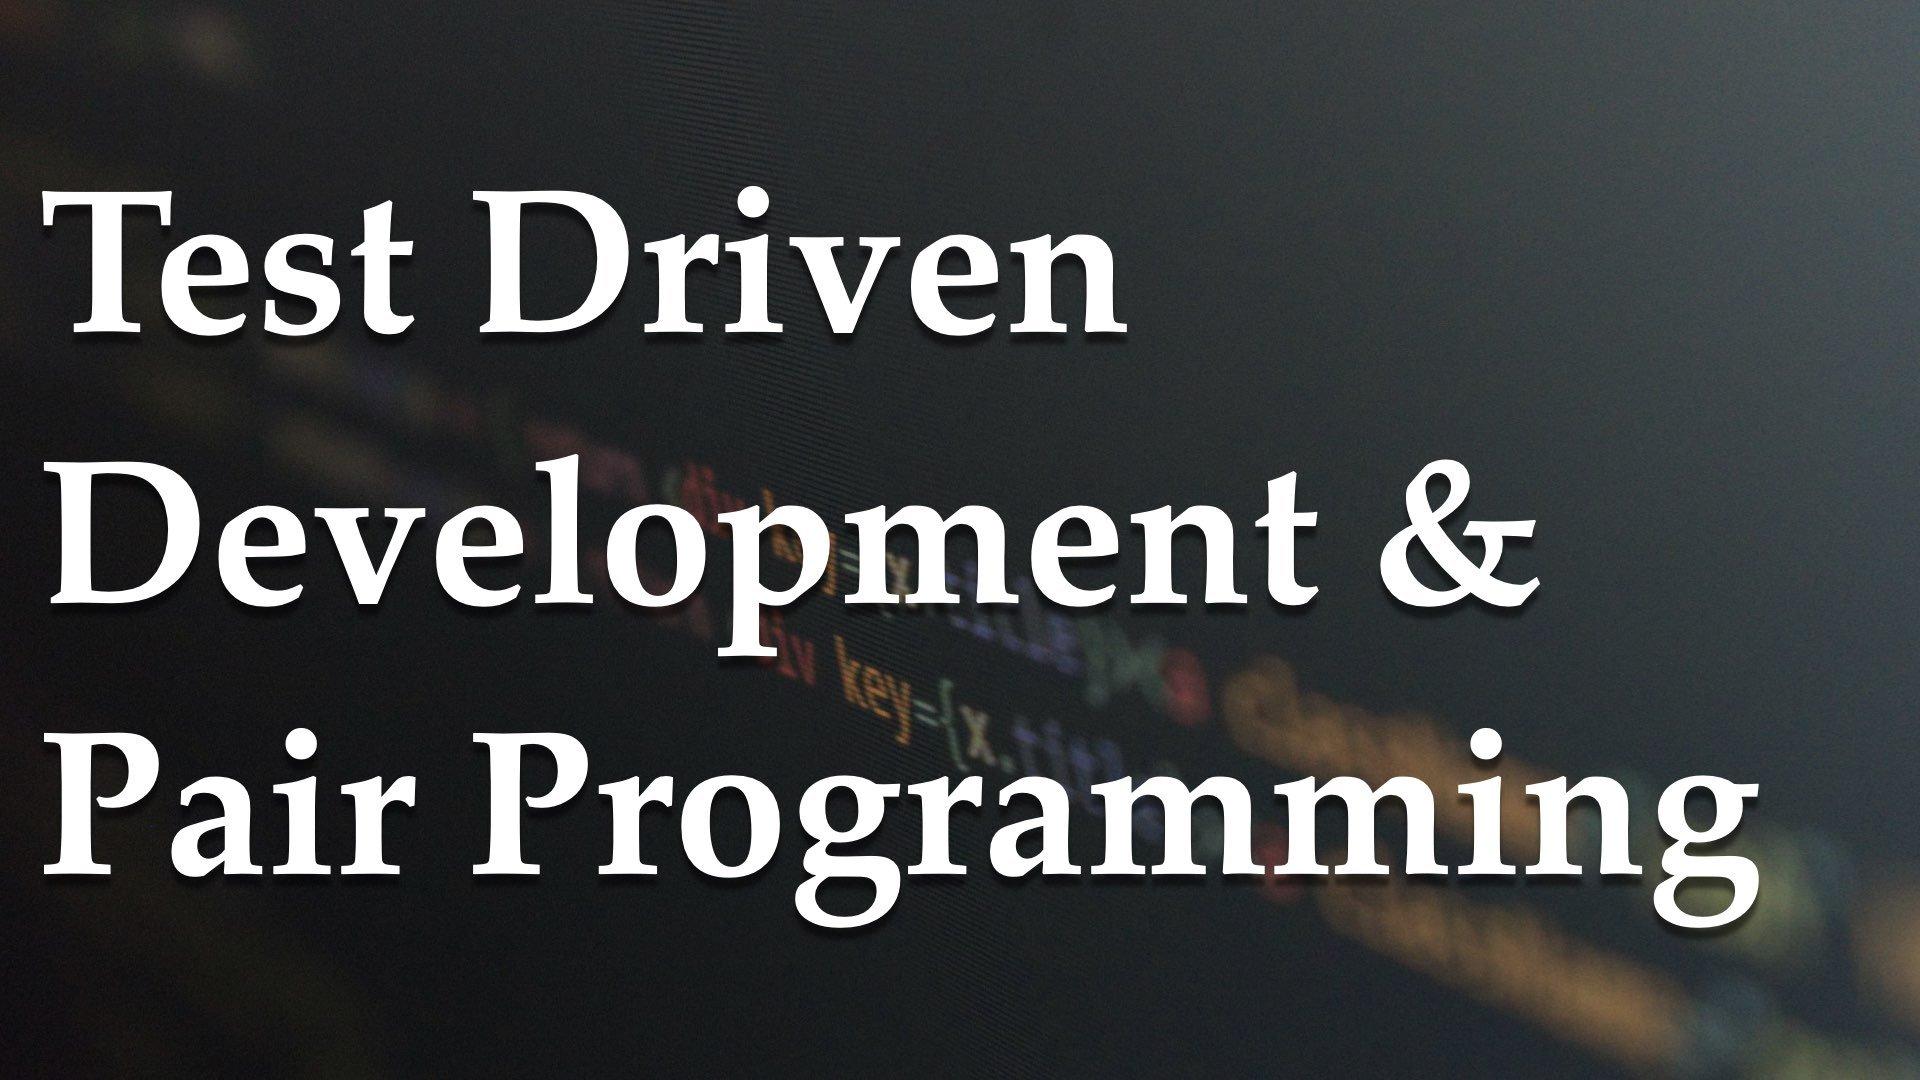 Test Driven Development & Pair Programming - Live Coding Demo